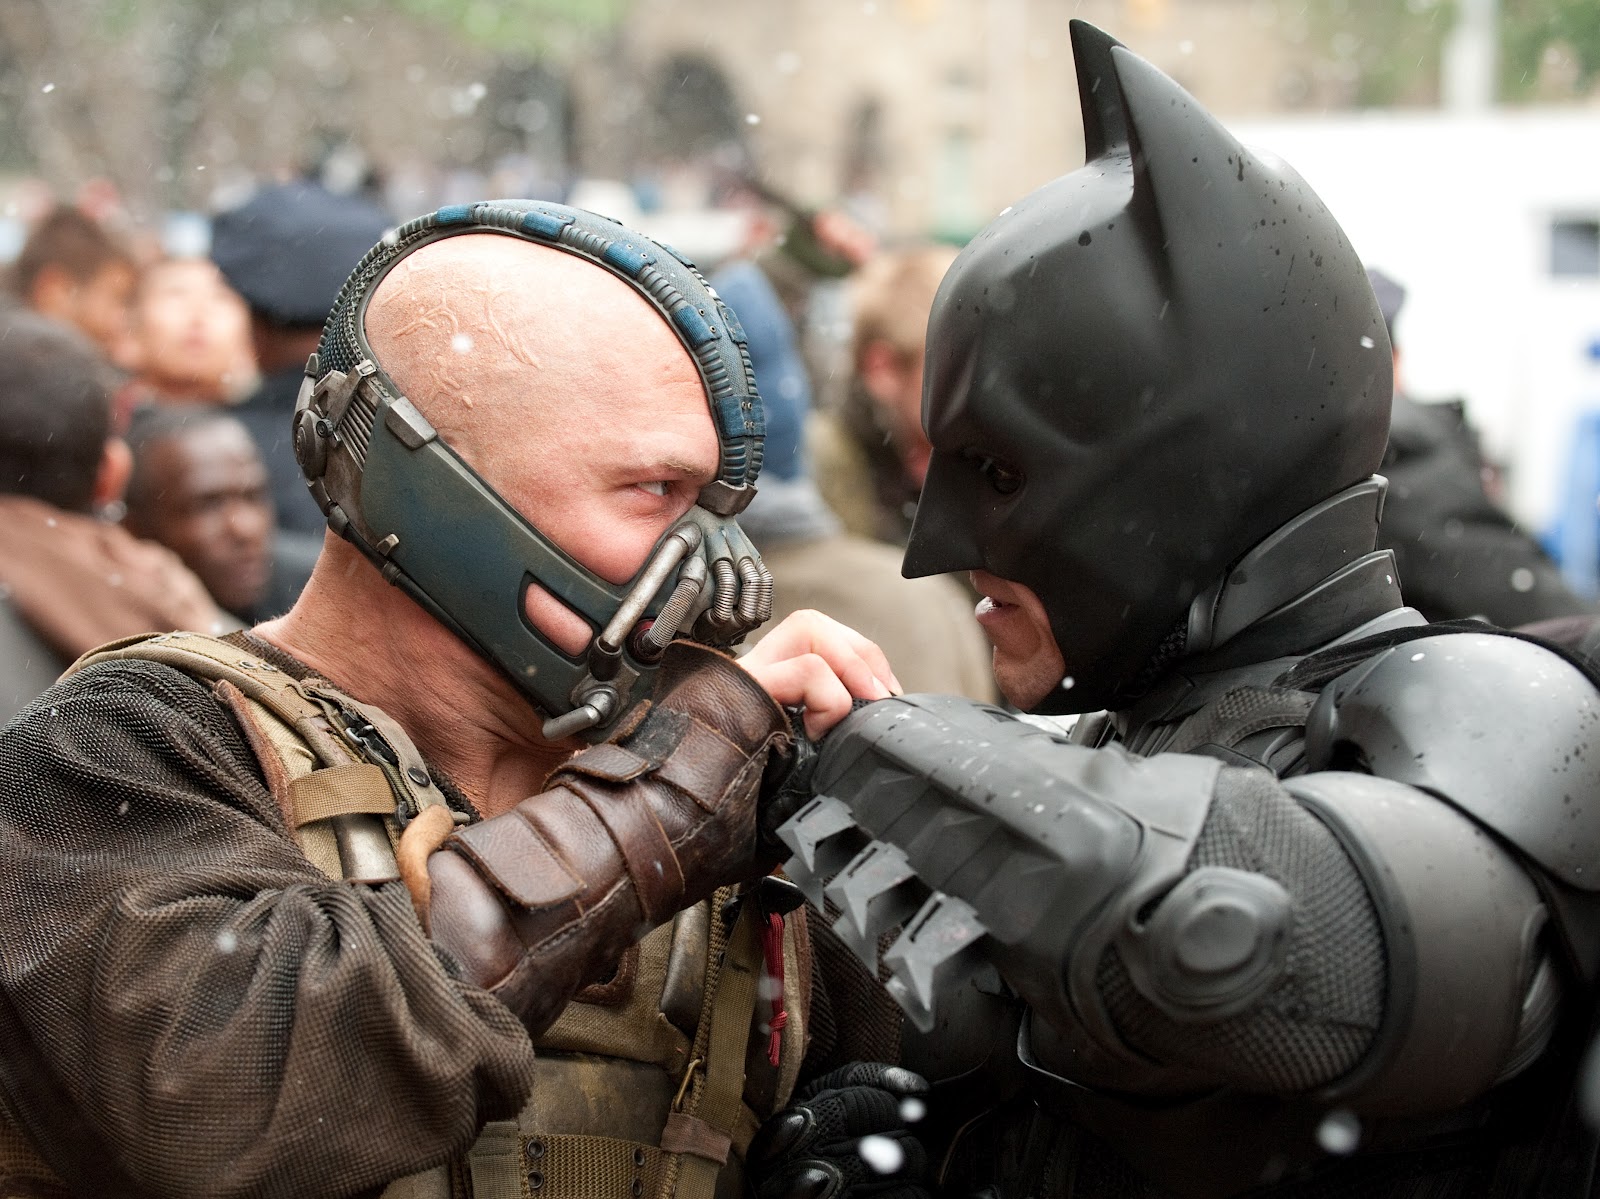 Bobby Rivers TV: Michael Caine Lifts Batman